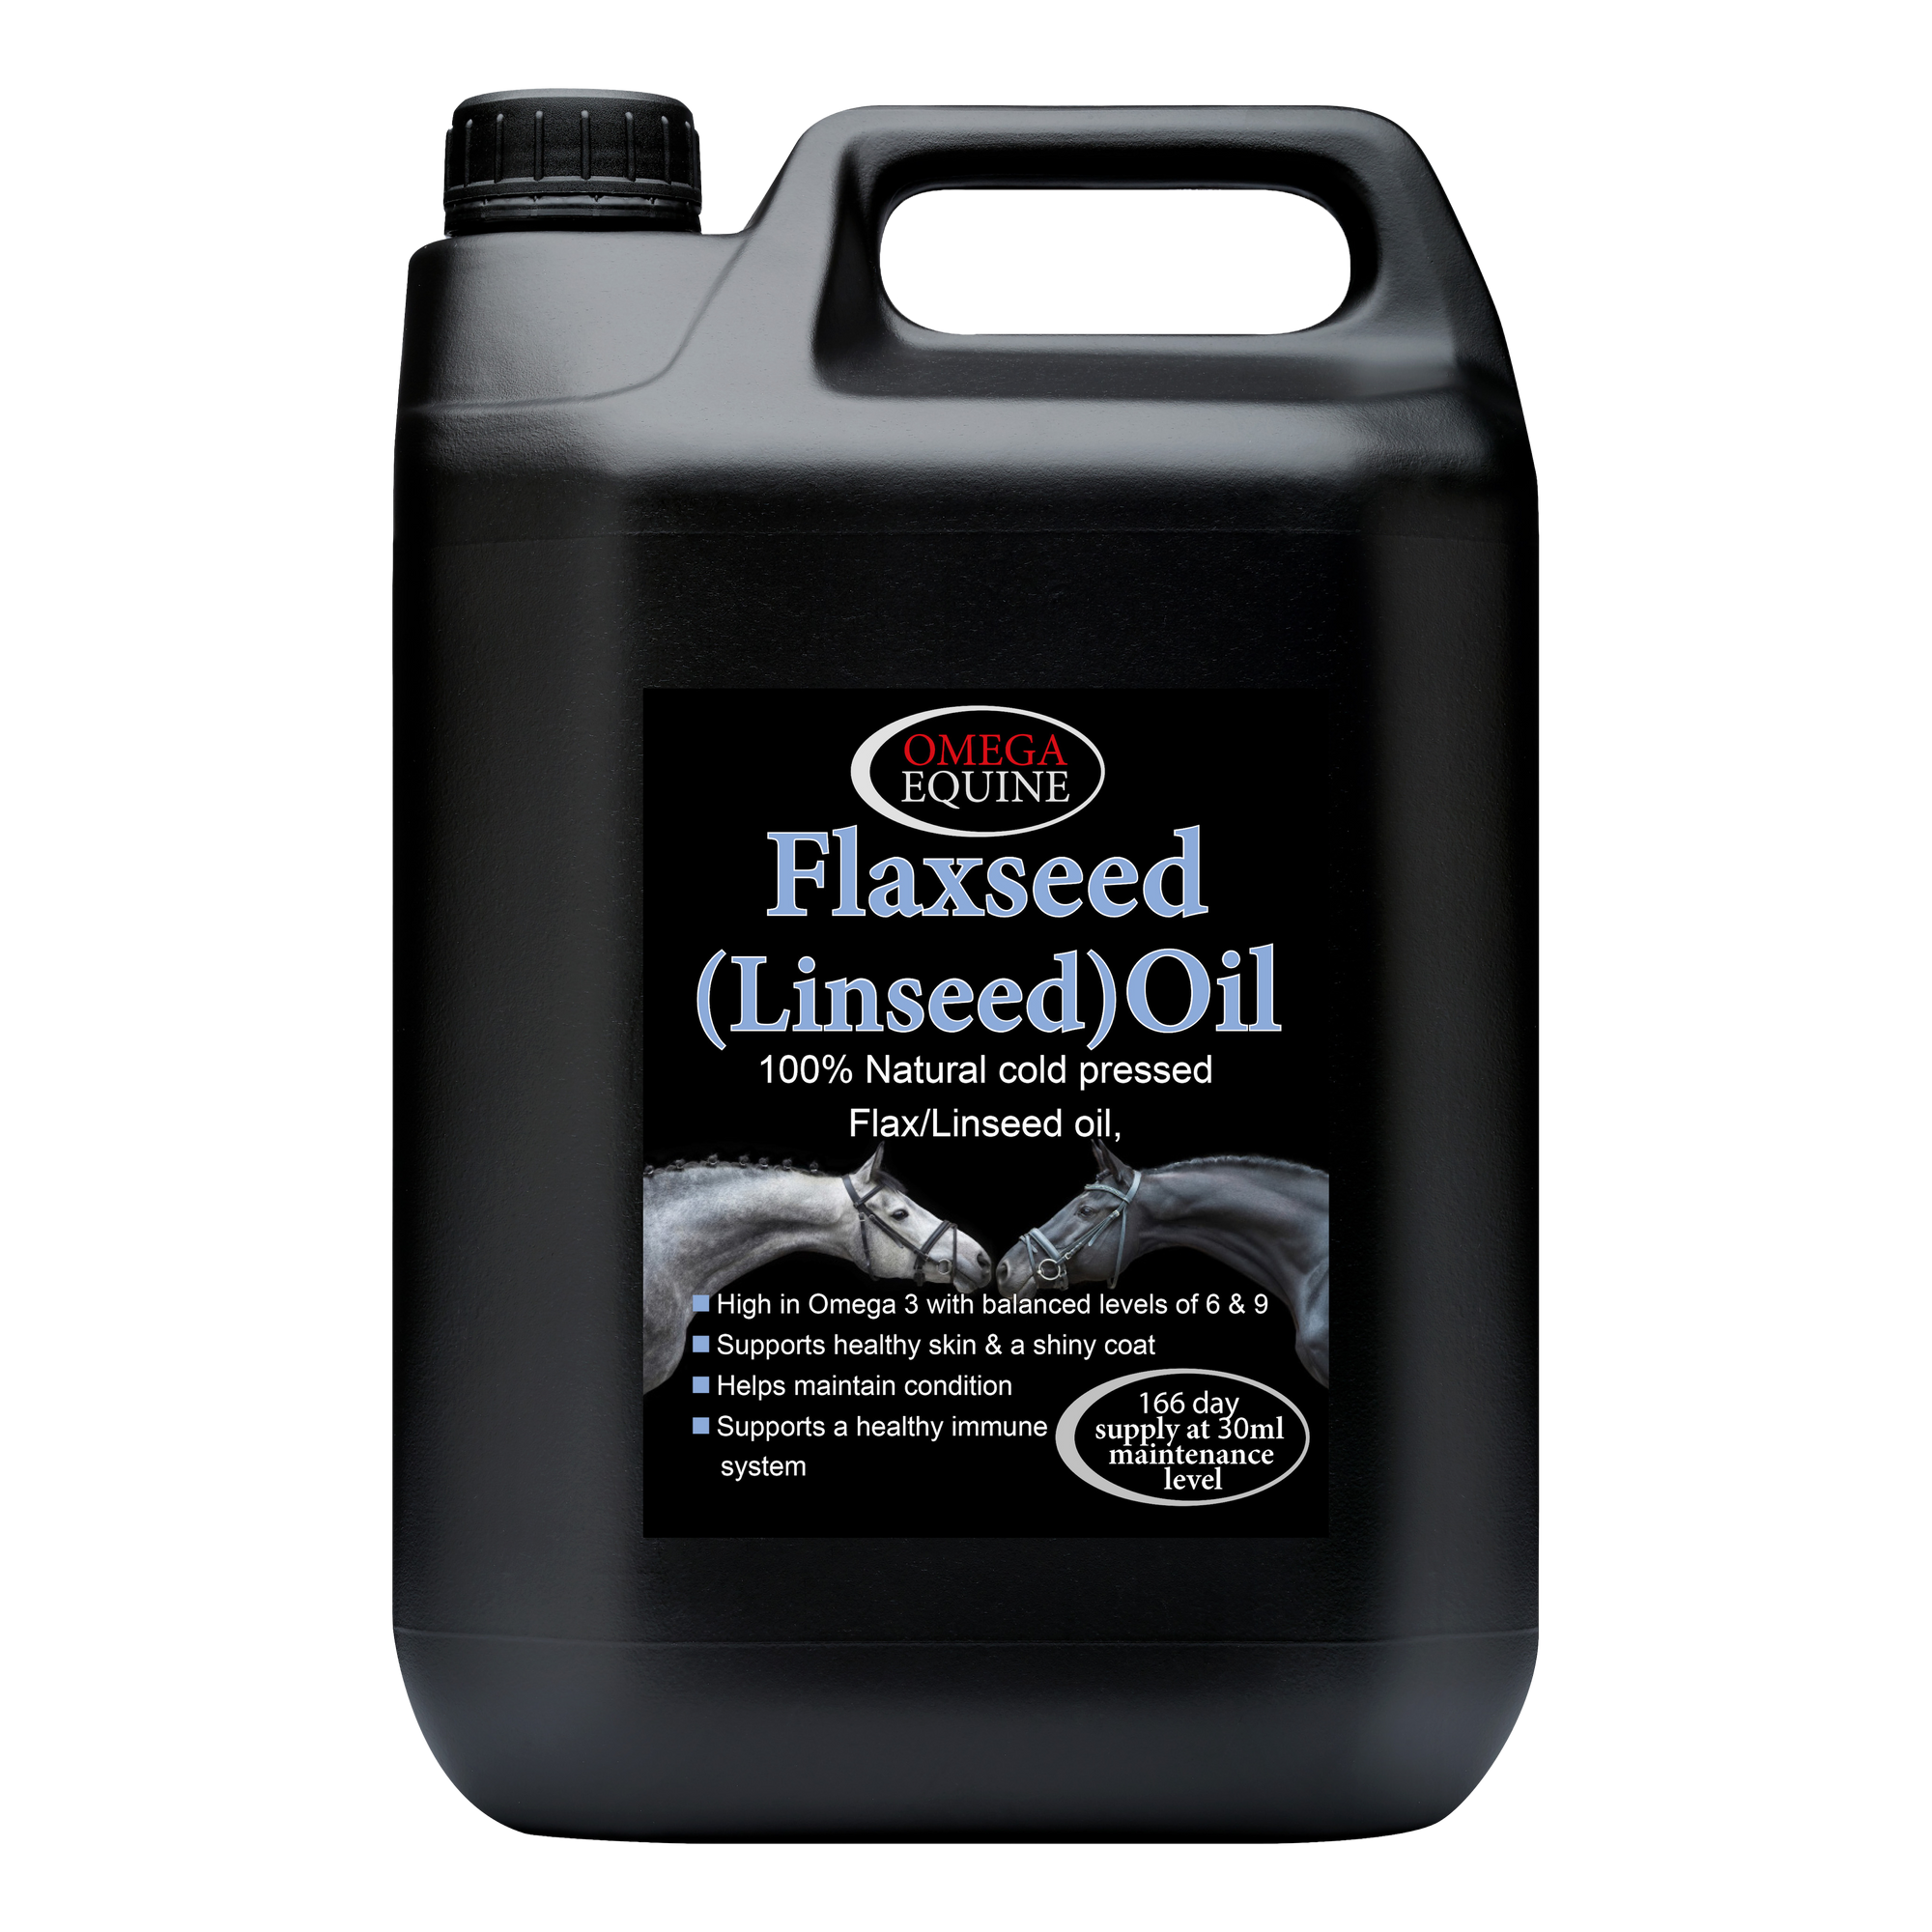 Omega Flax (Linseed) Oil